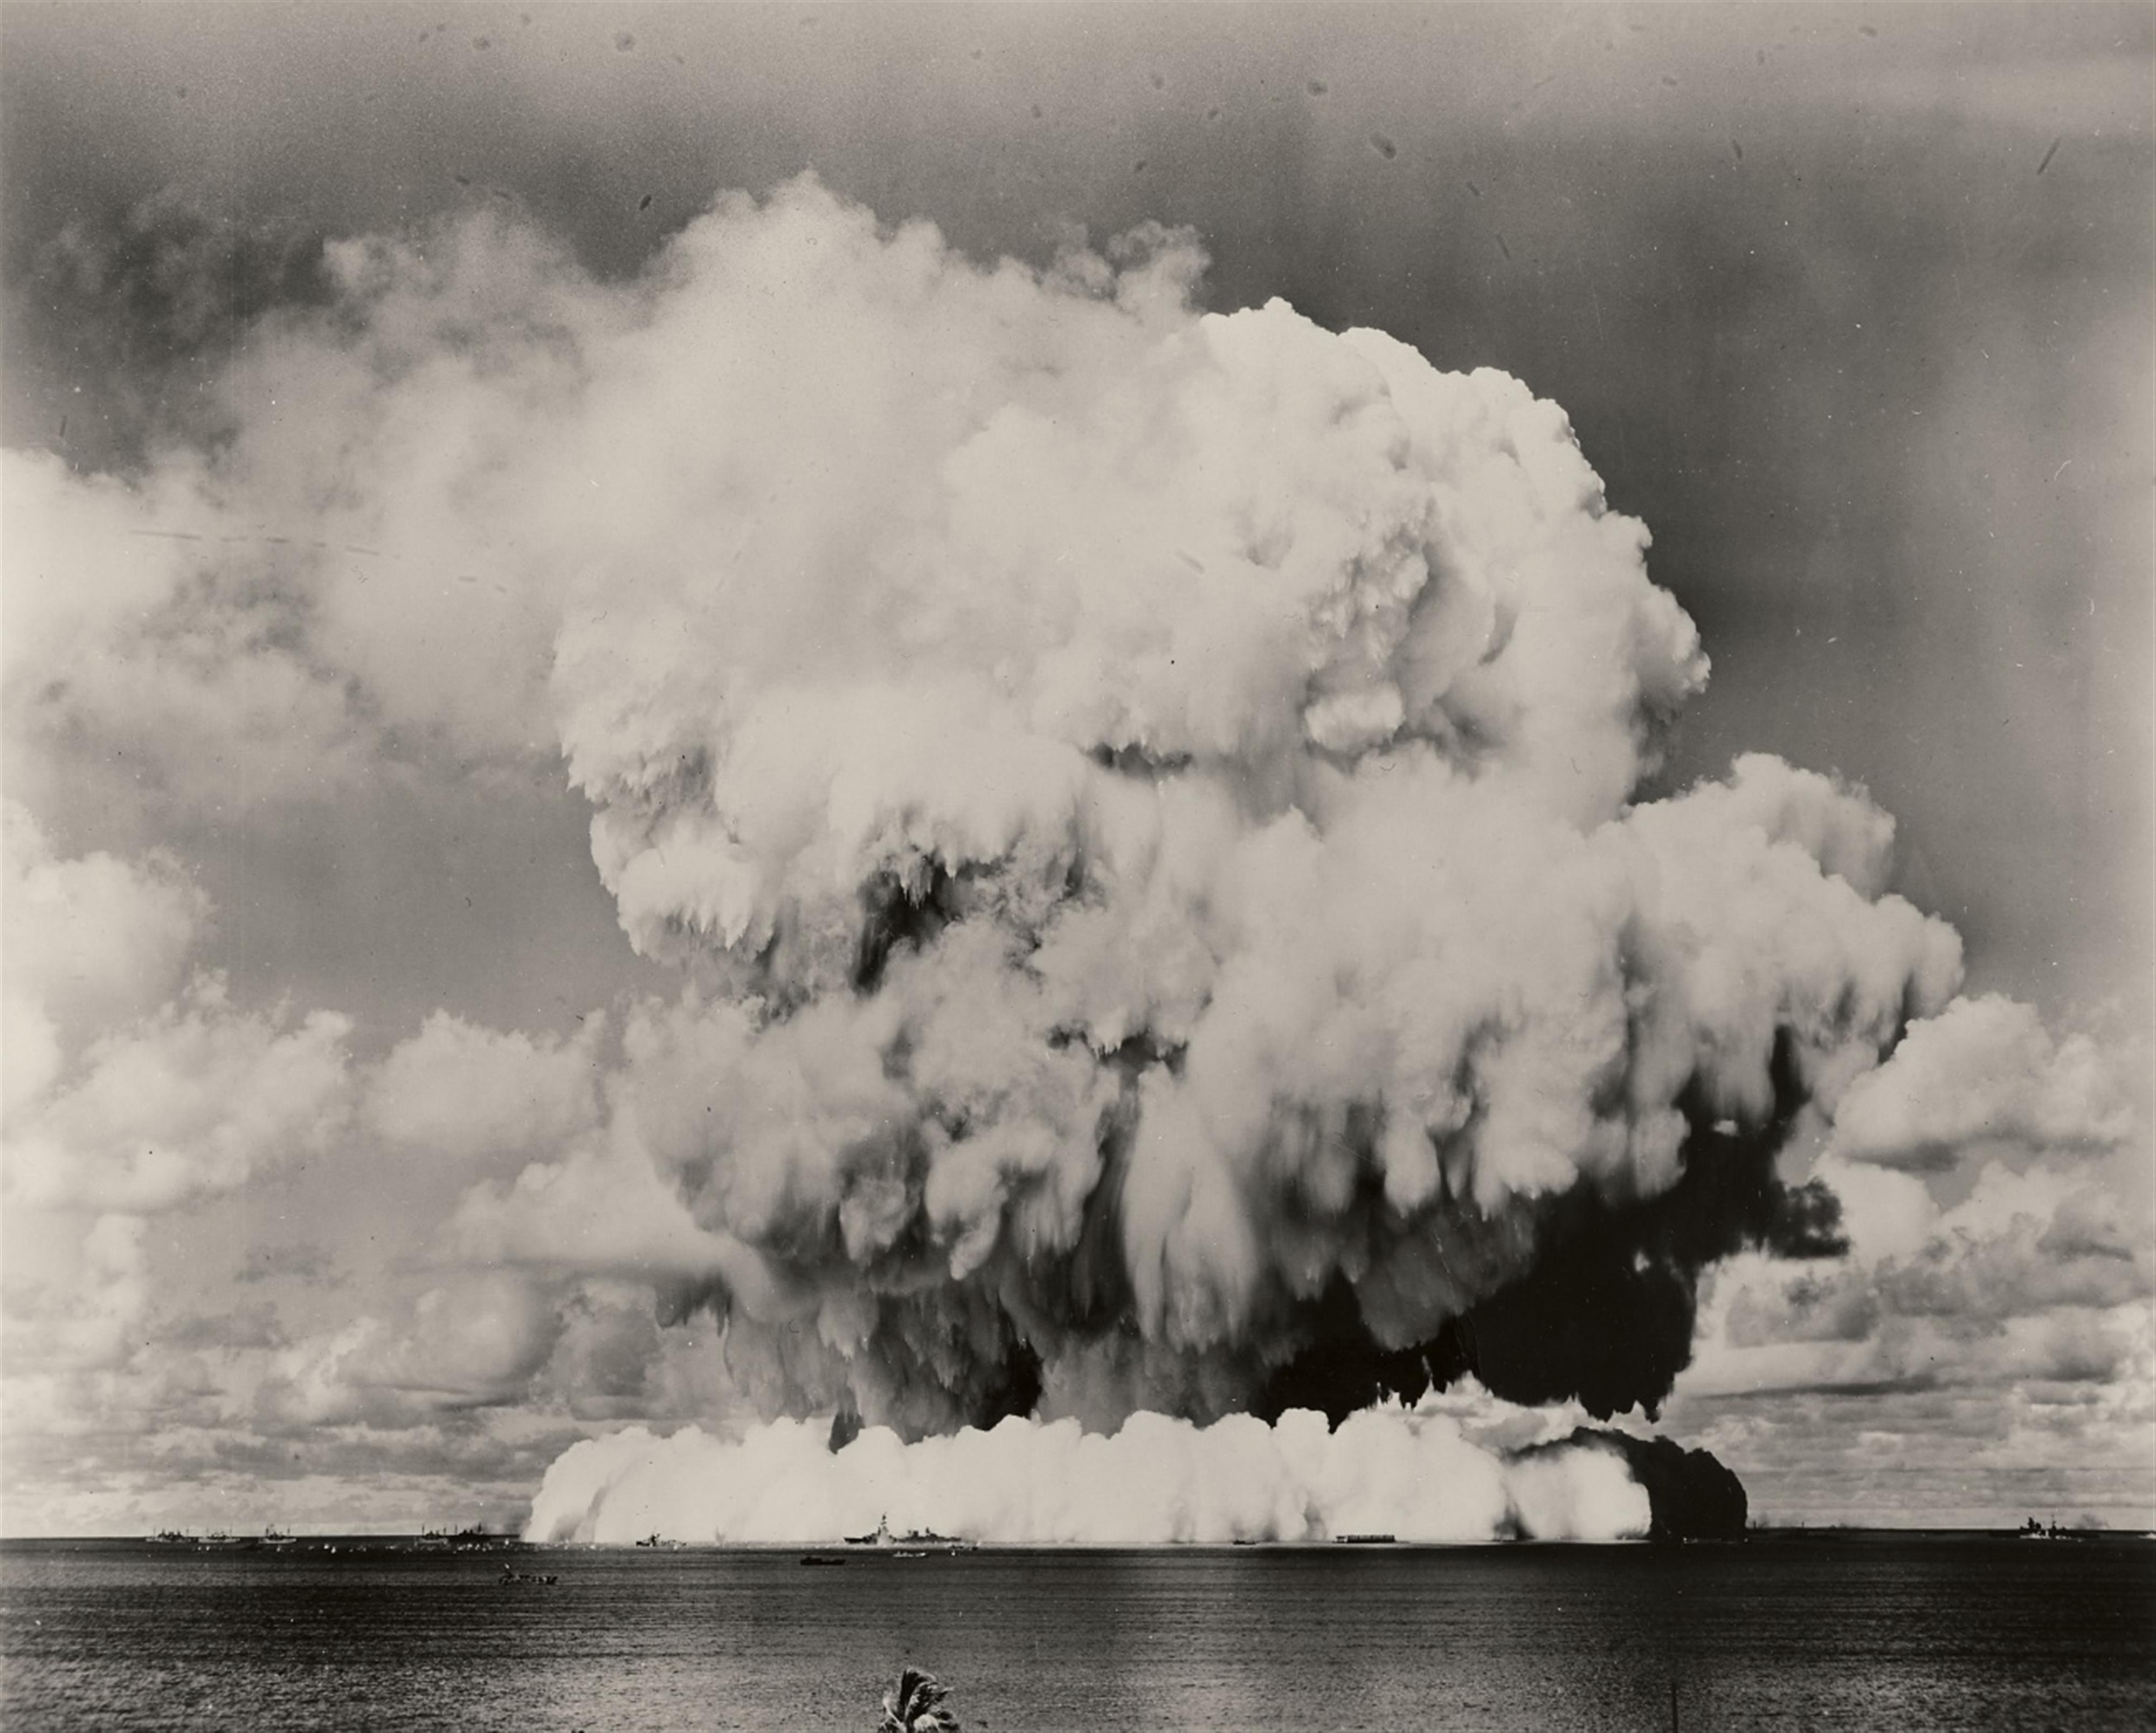 Joint Army Task Force One Photo - "Operation Crossroads" - Aufnahmen der Atombomben-Tests auf dem Bikini-Atoll - image-19